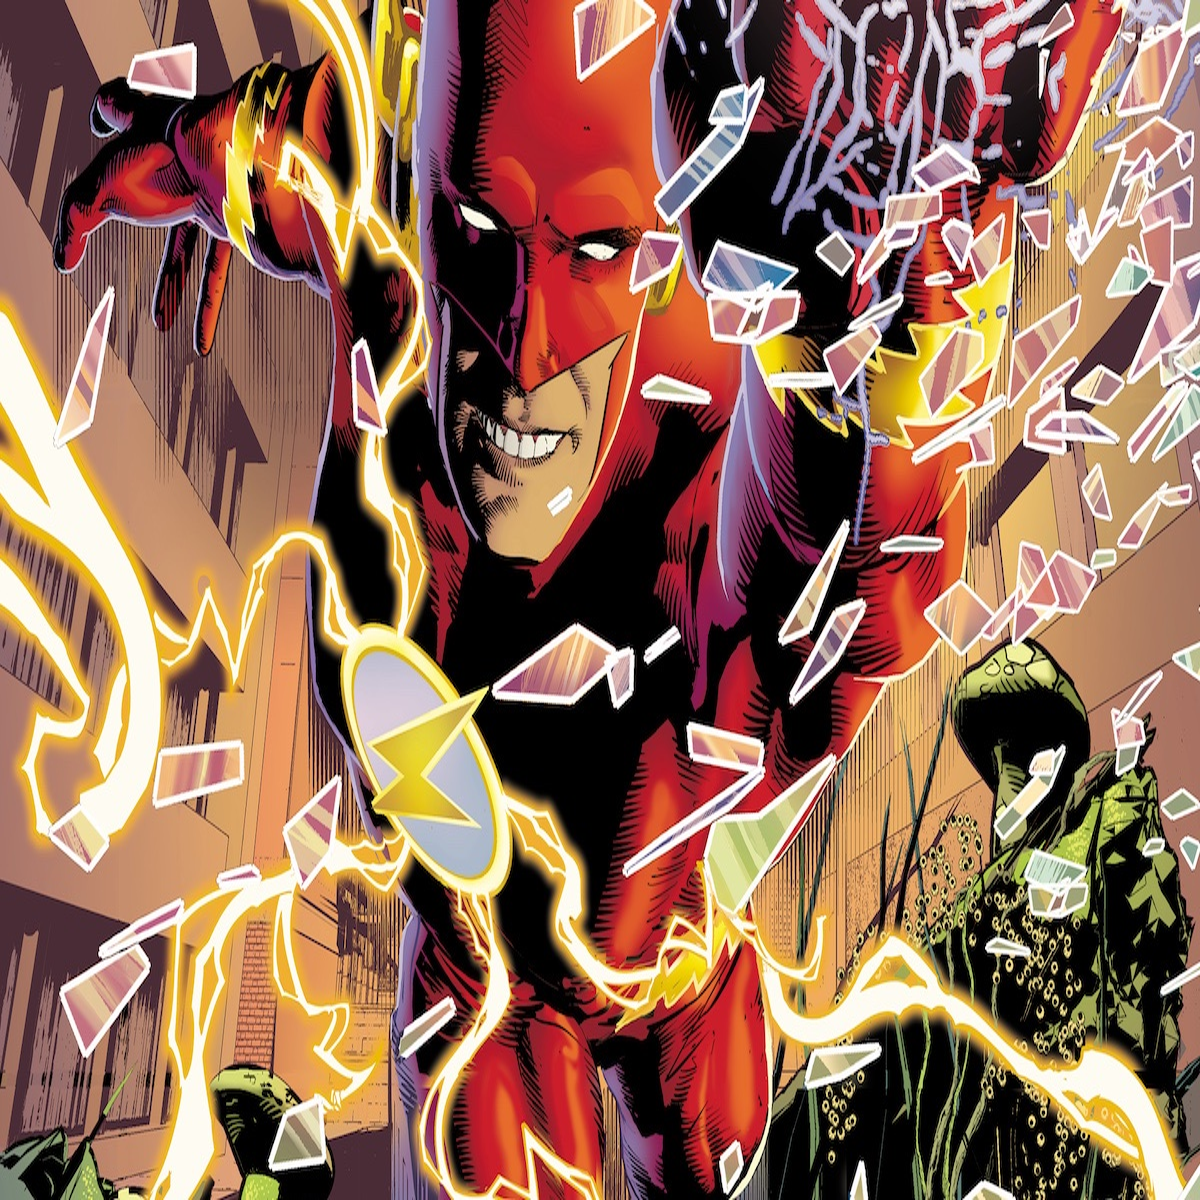 SNEAK PEEK : The Flash - The Final Run